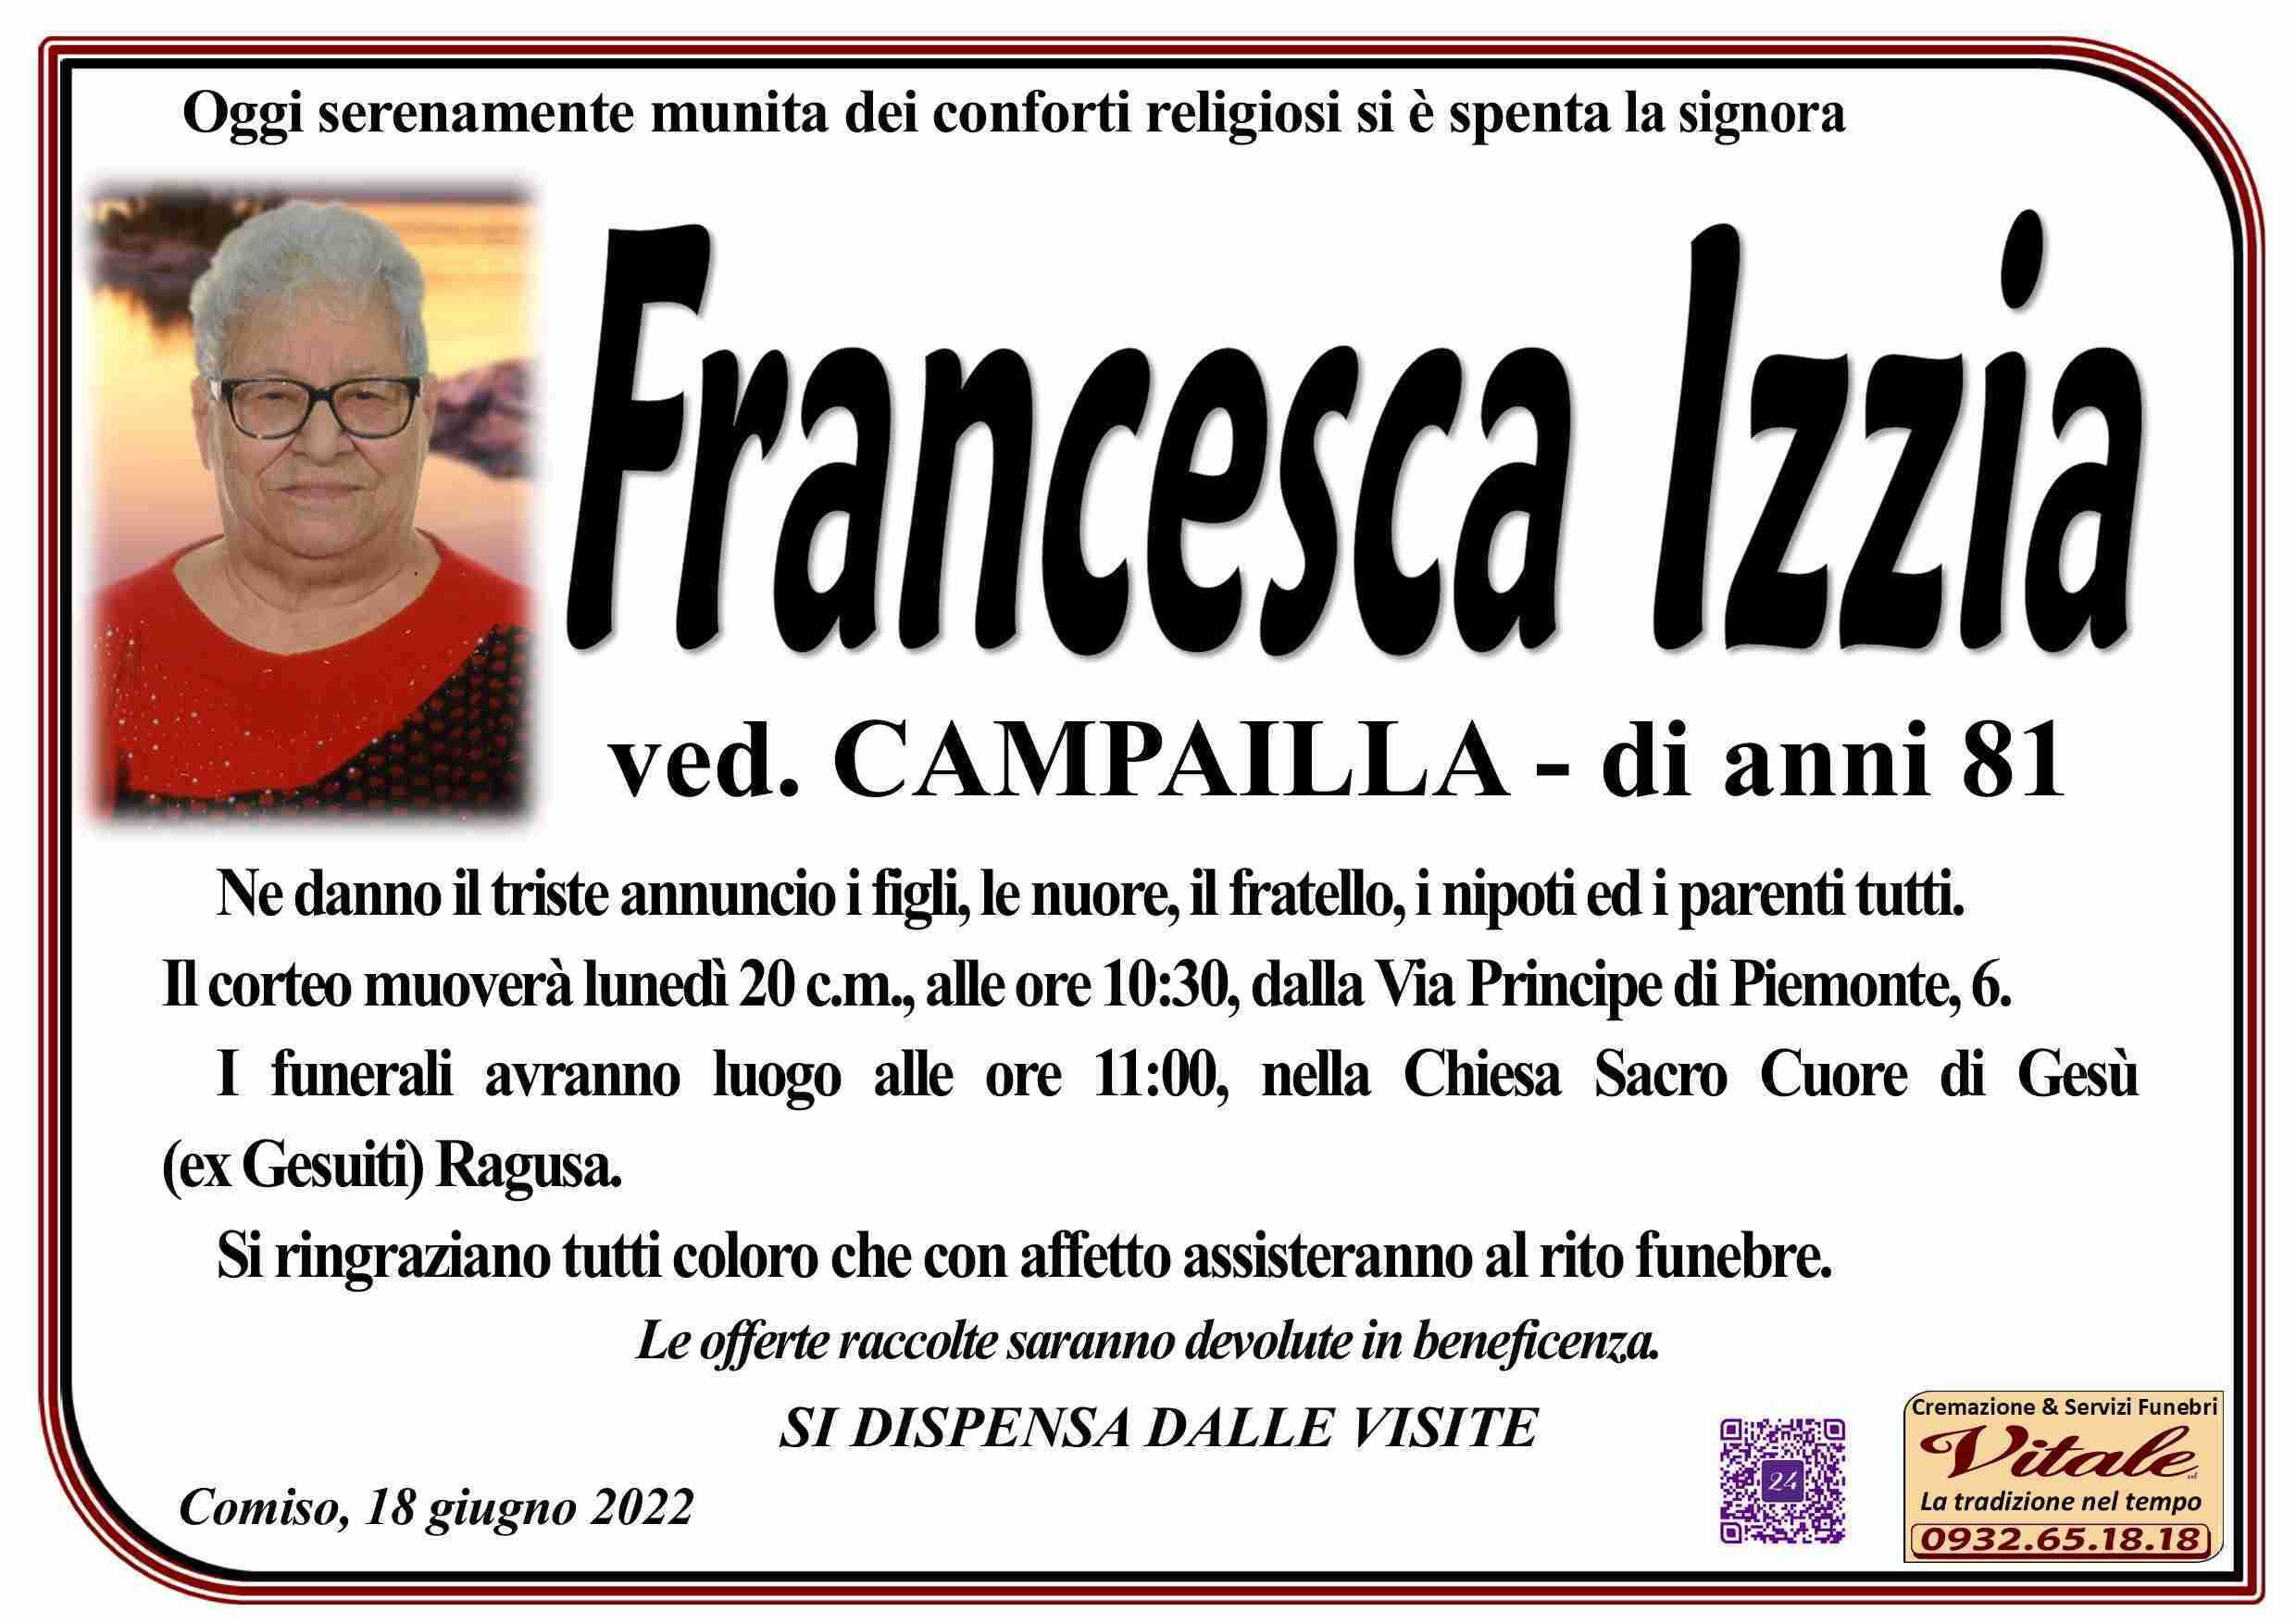 Francesca Izzia